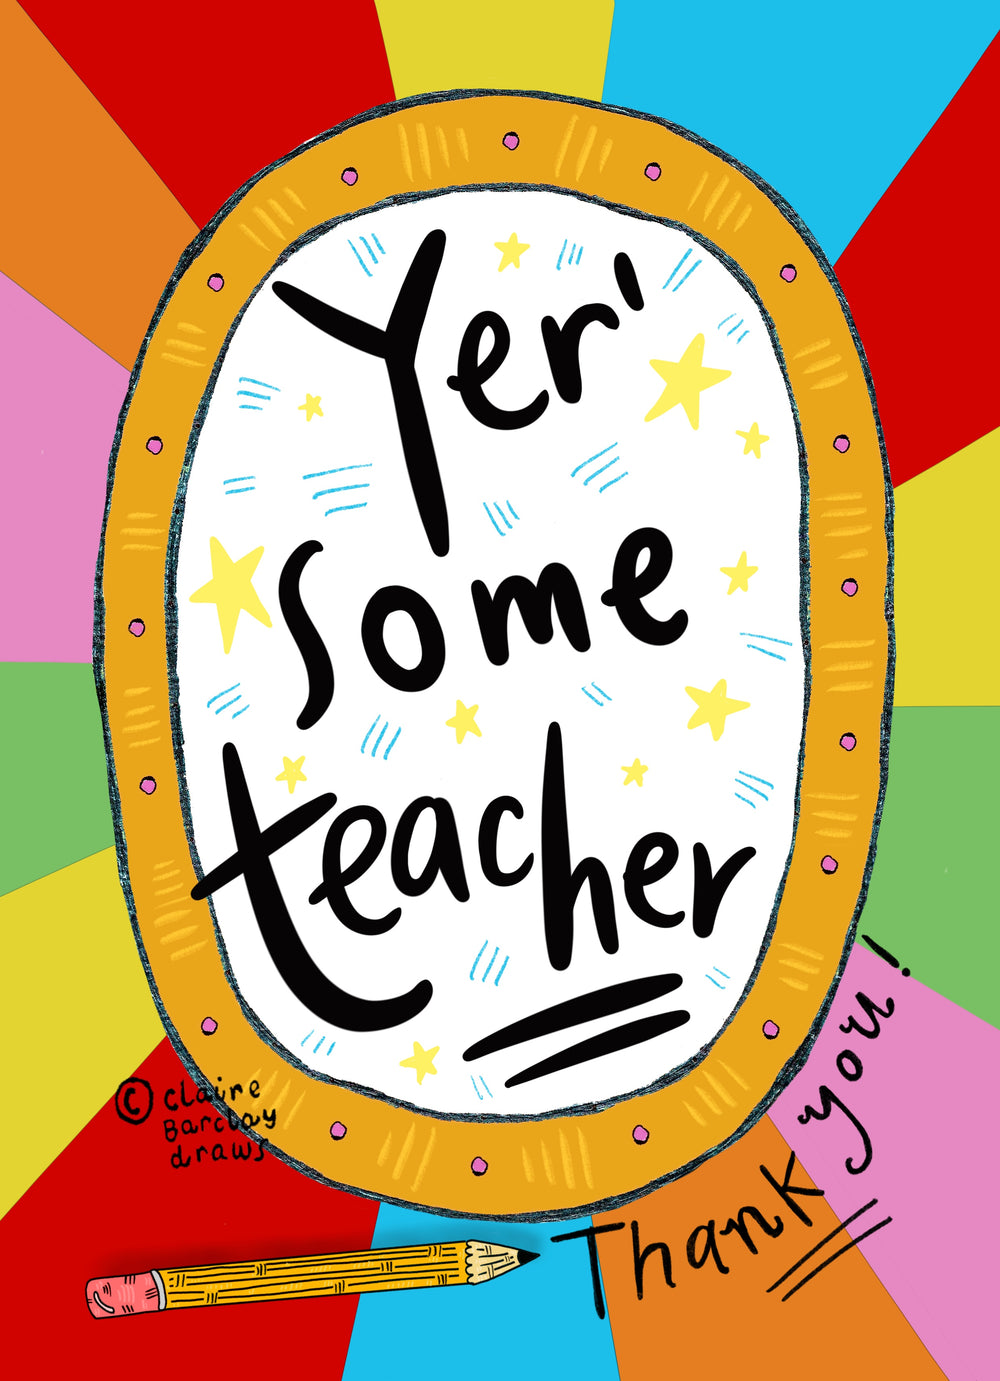 Yer’ some Teacher! Greetings Card